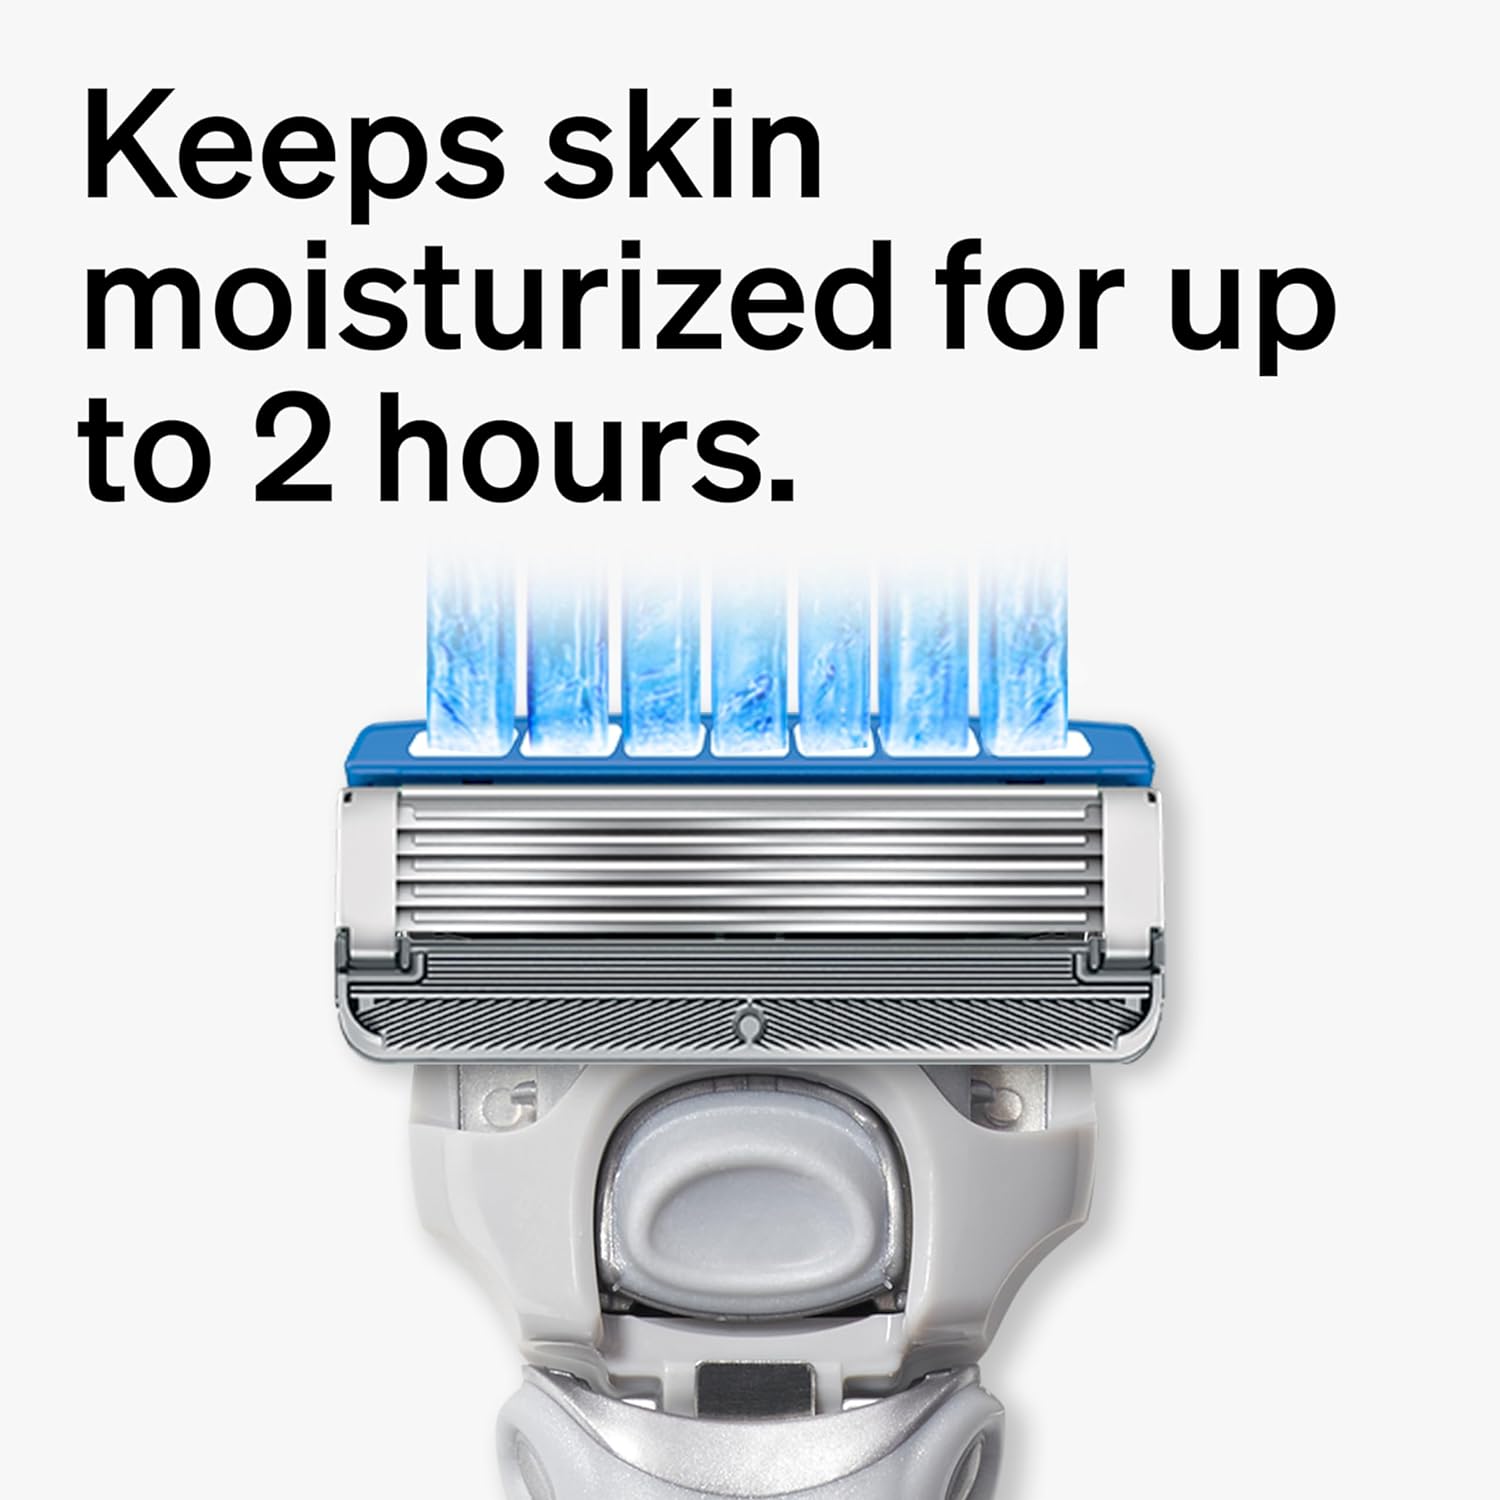 Schick Hydro Dry Skin Razor Refills, 6ct | Razor Blades Refills, Razor Blades for Men, Shaving Blades for Men, Hydro Razor Blades Refill, 5 Blade Razor Men, 6 Refills : Beauty & Personal Care